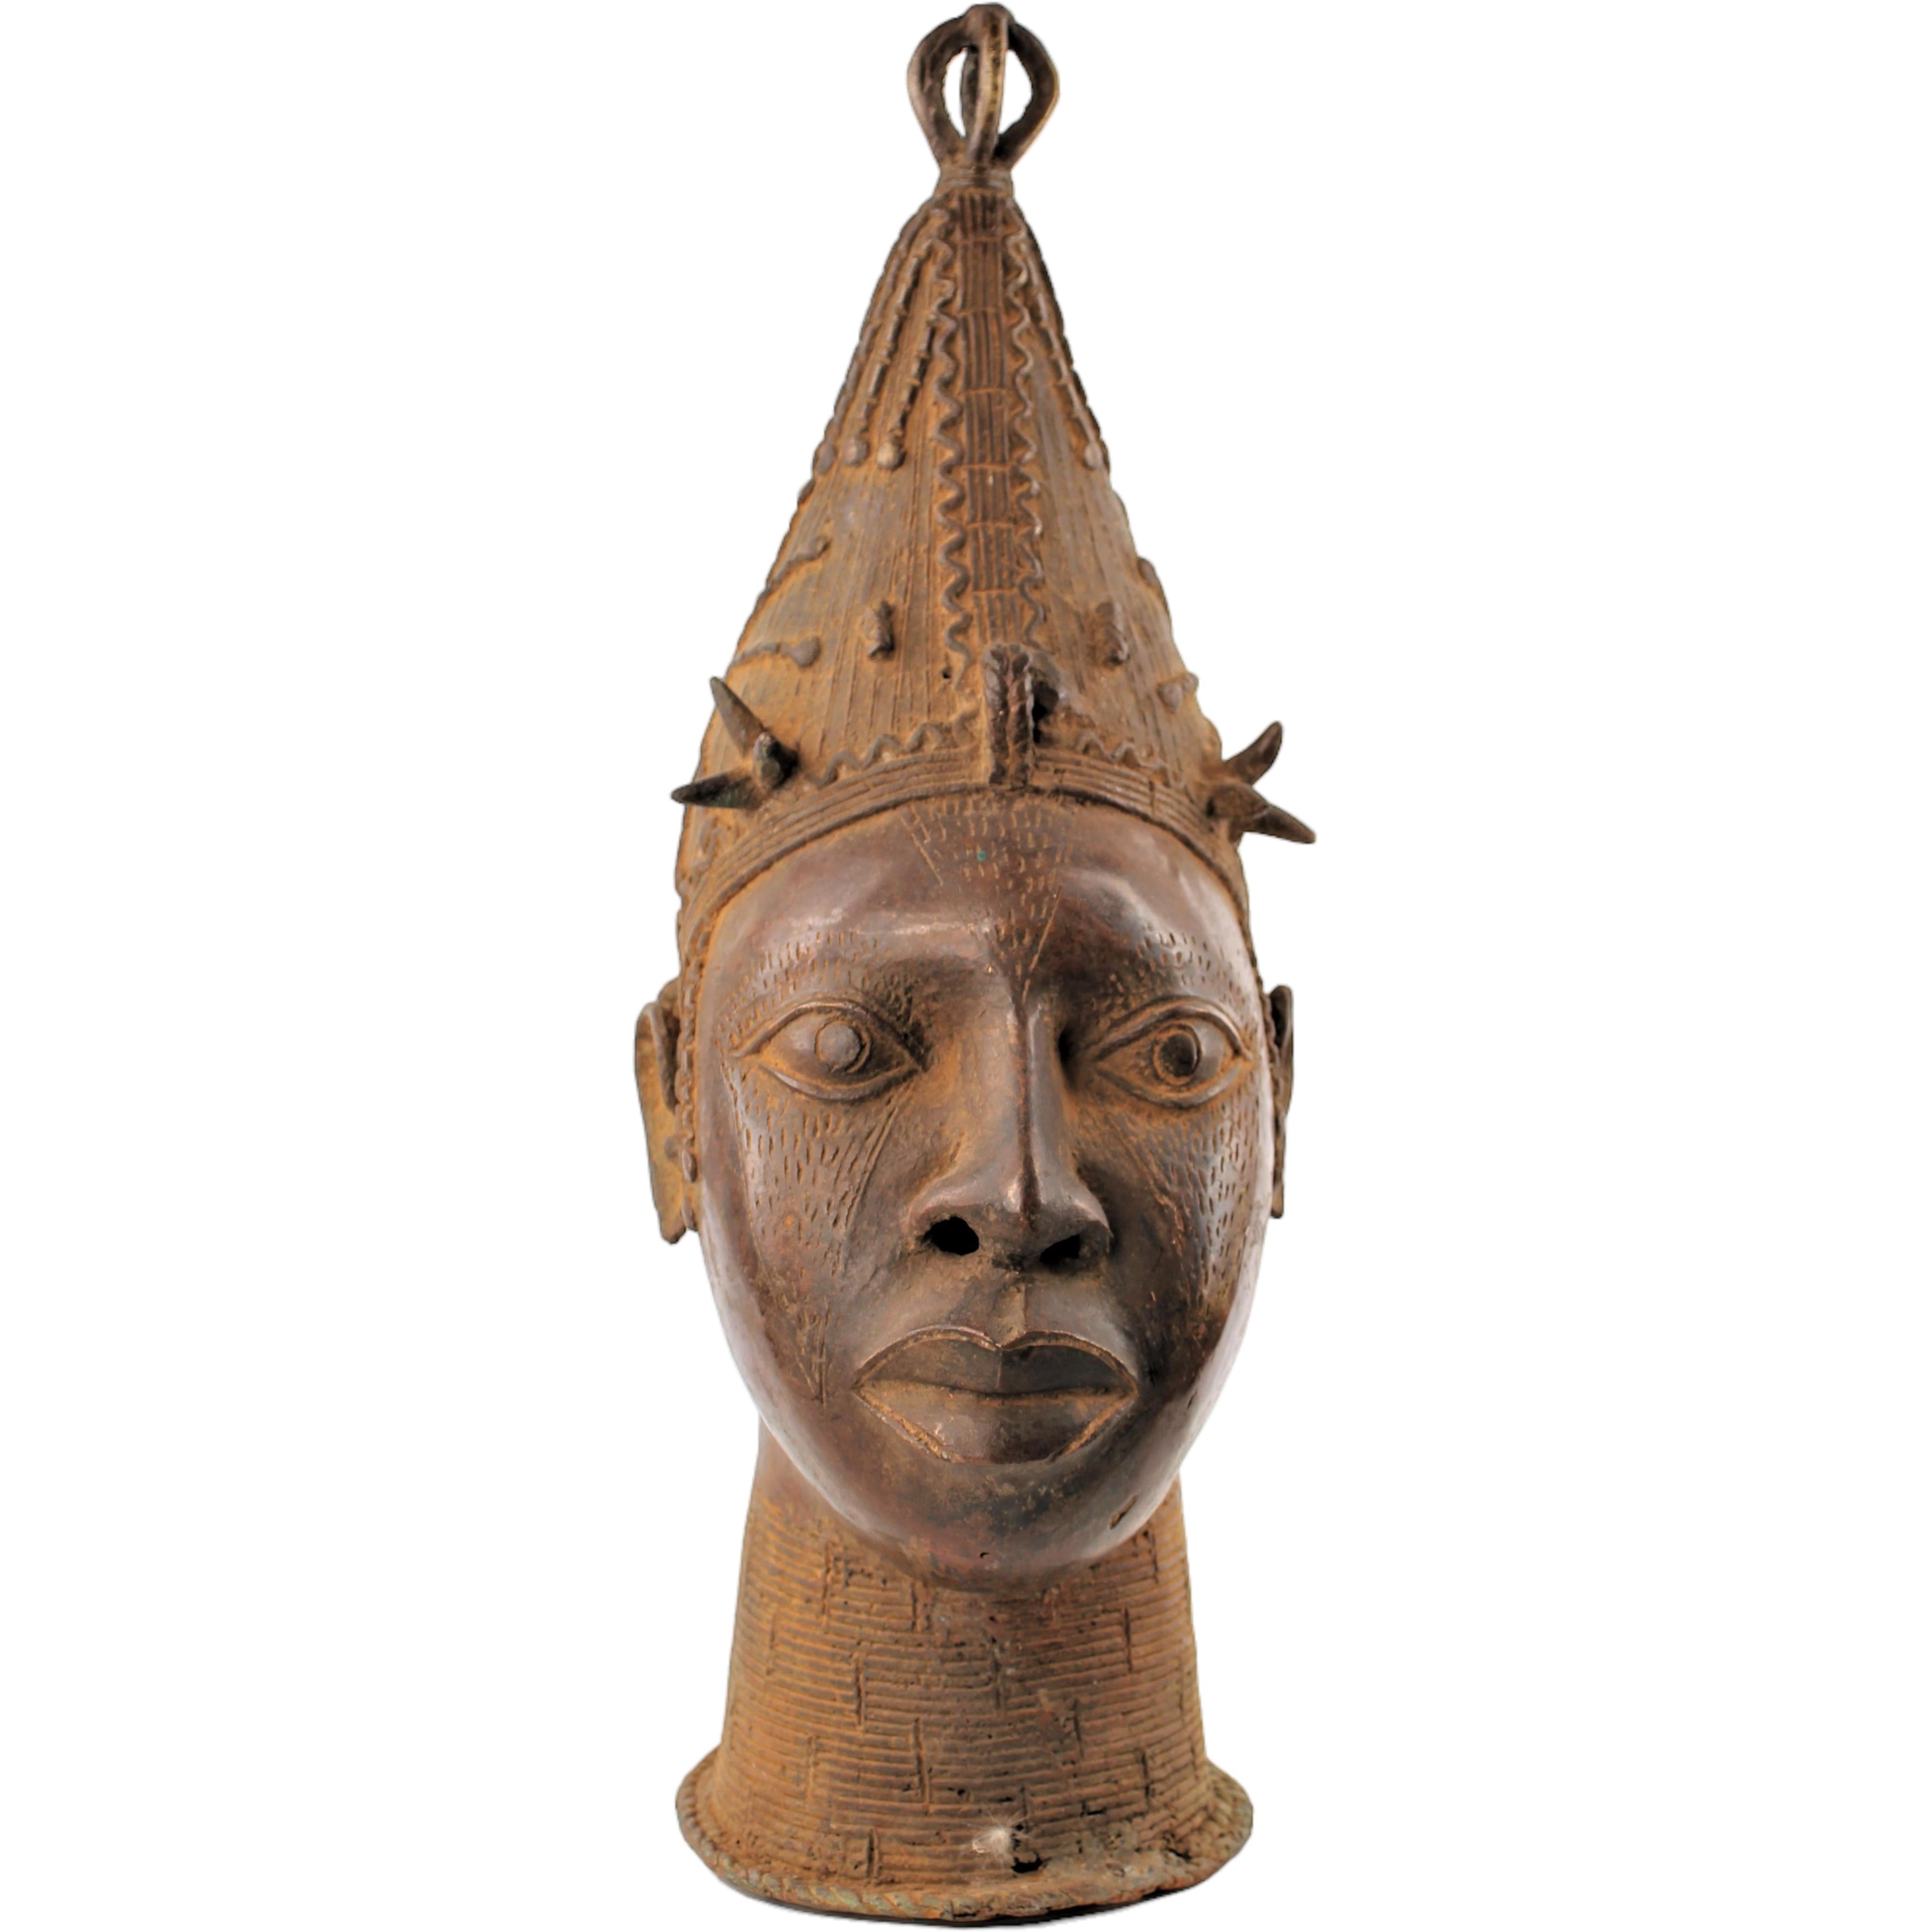 Yoruba Tribe Heads ~20.1" Tall - Heads